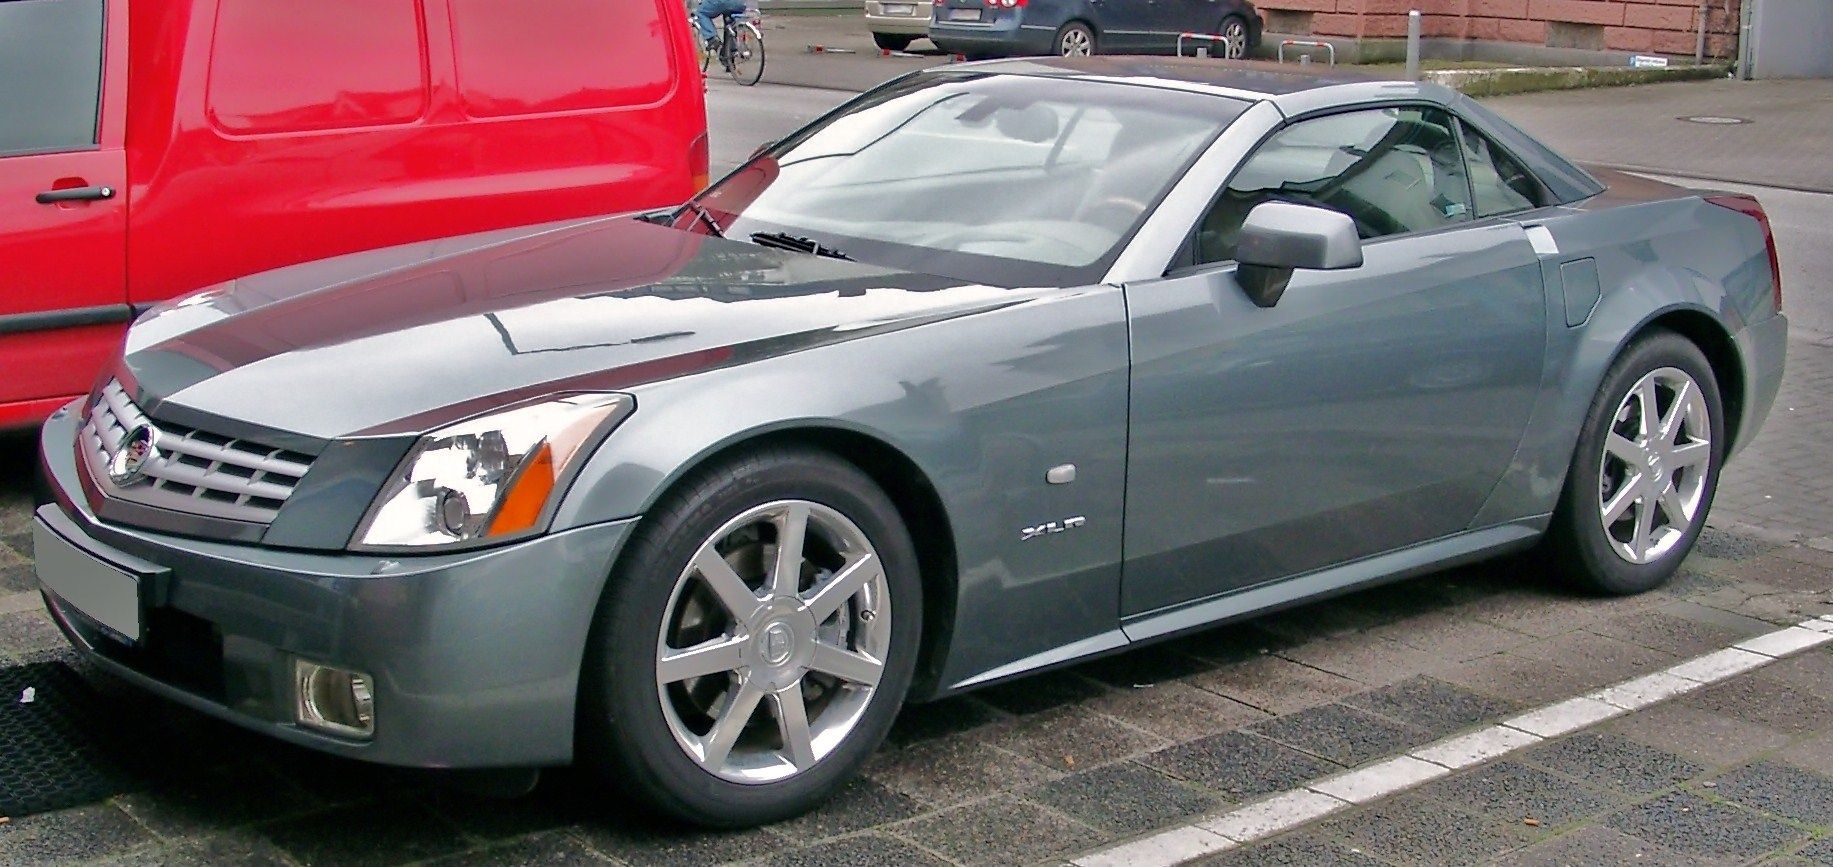 The 2009 Cadillac XLR on a parking lot.